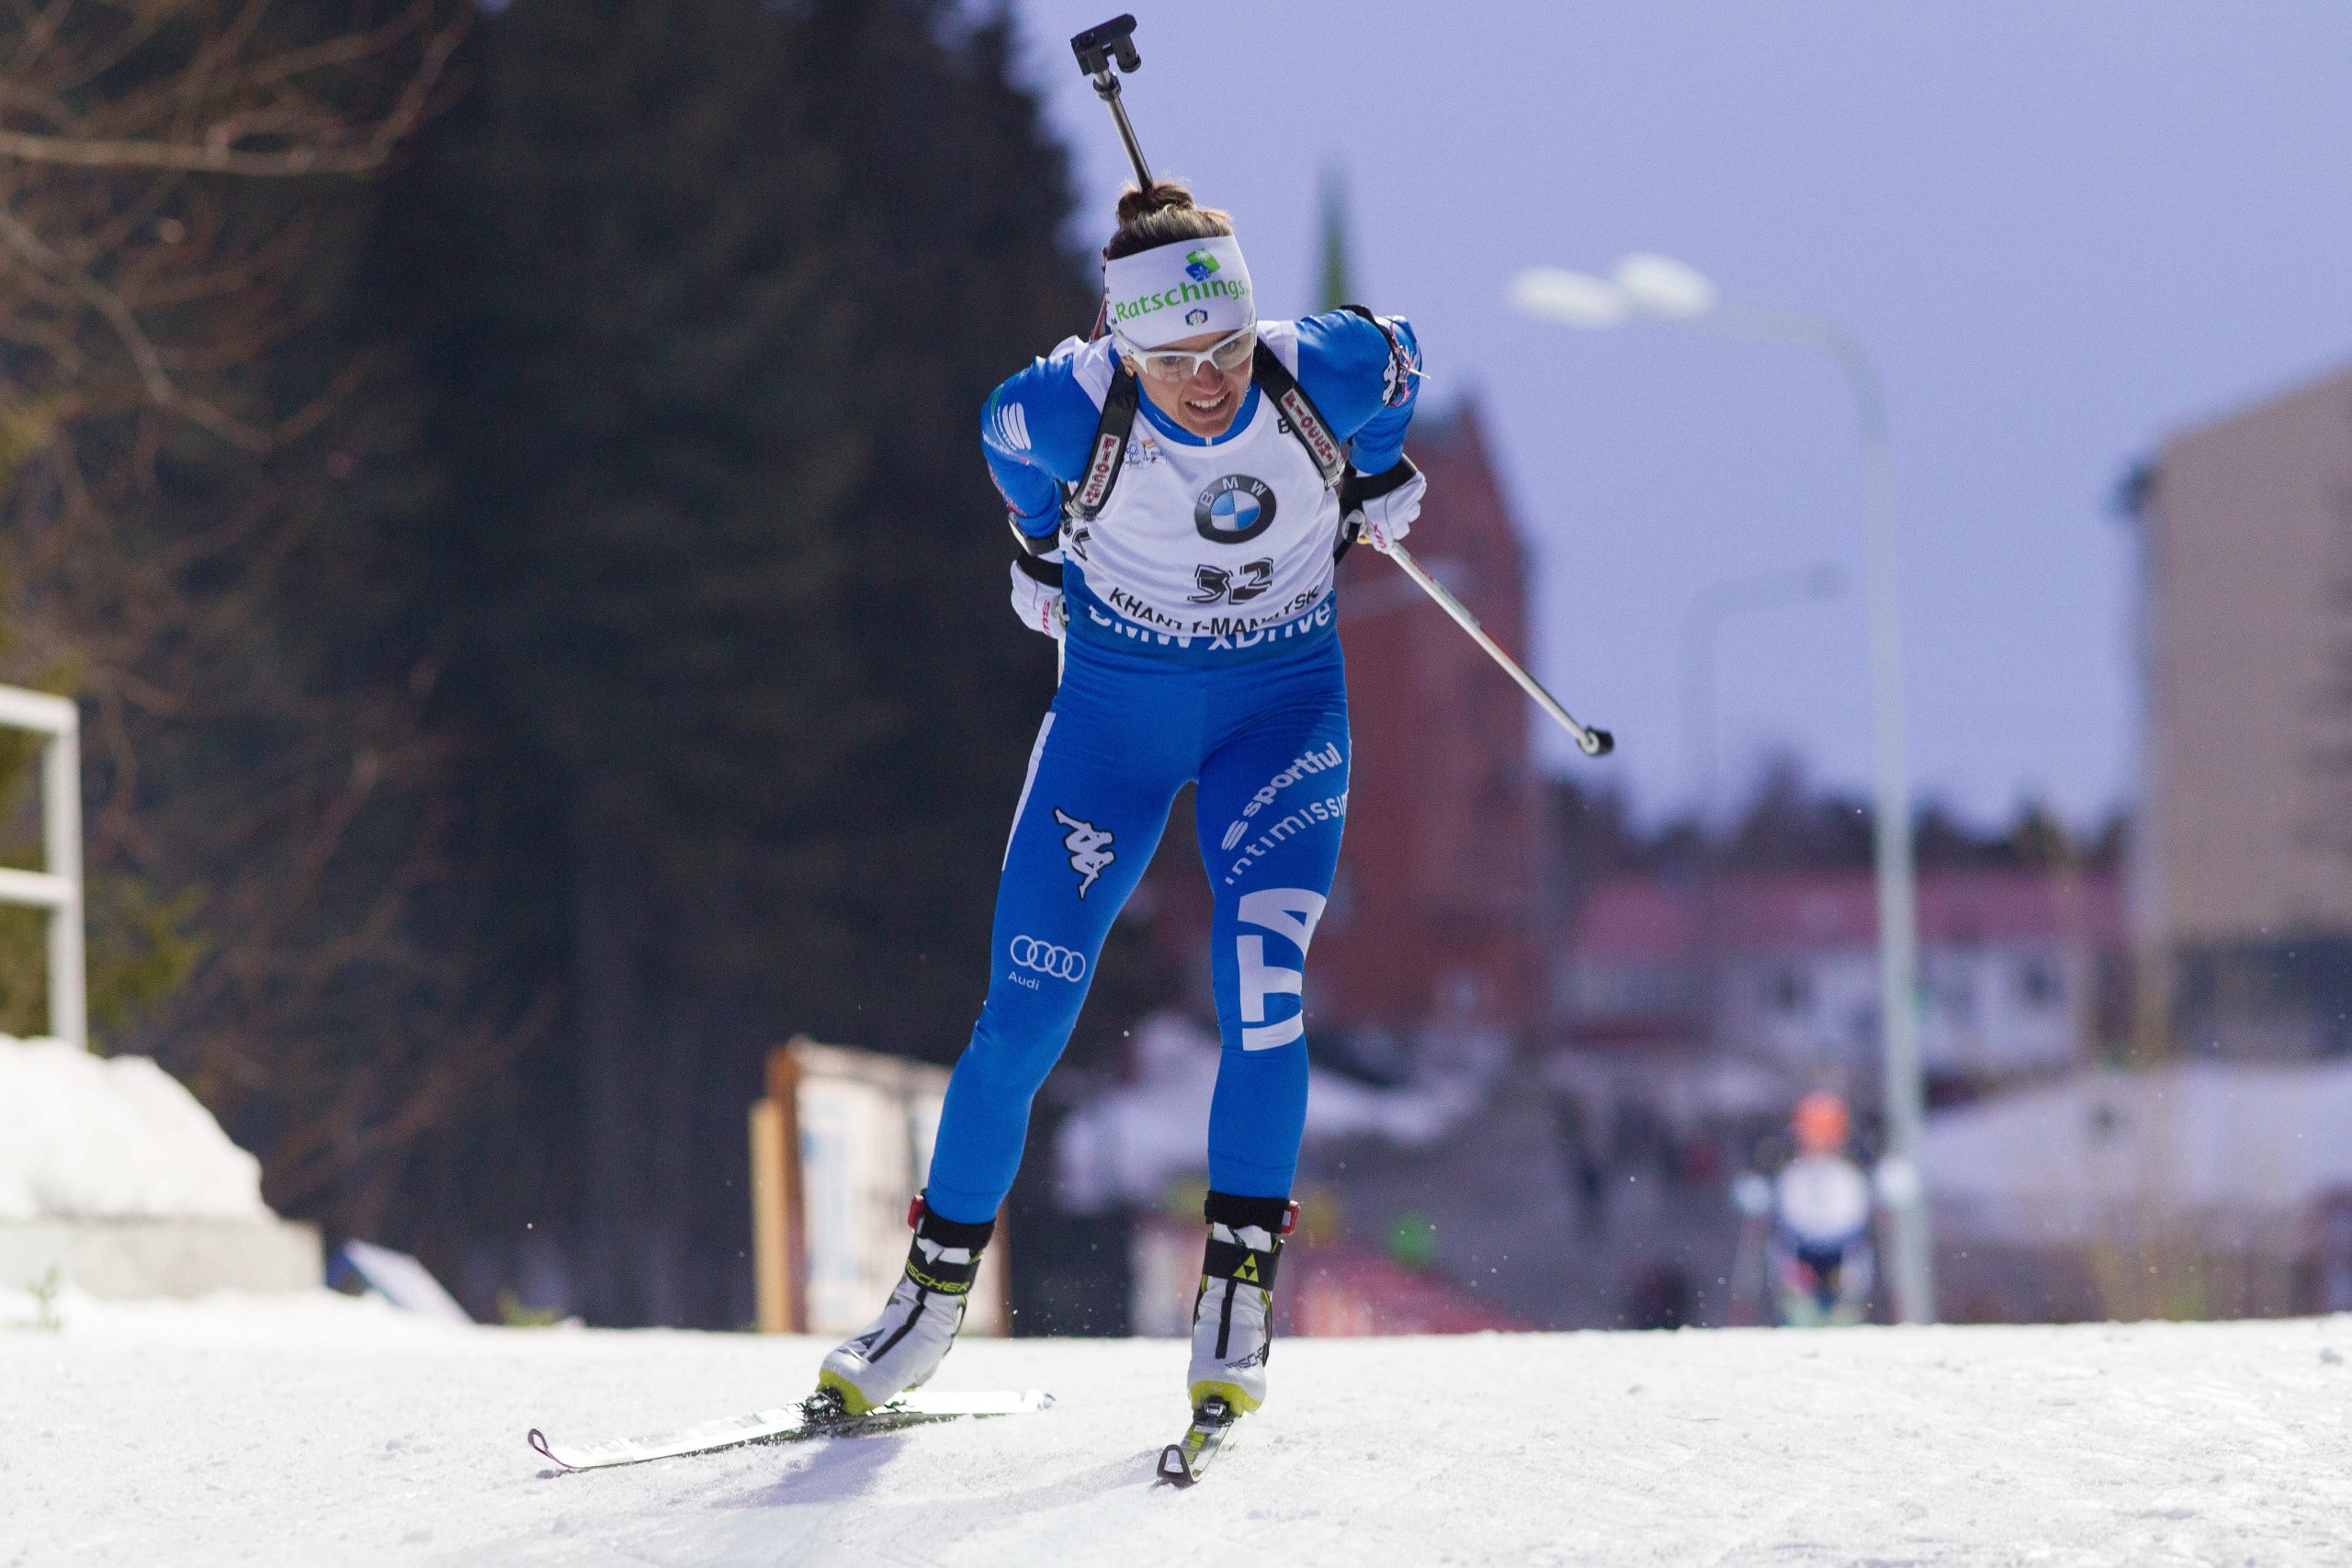 Il bronzo mondiale Karin Oberhofer, settima nella sprint di Khanti Mansiysk (NordicFocus)